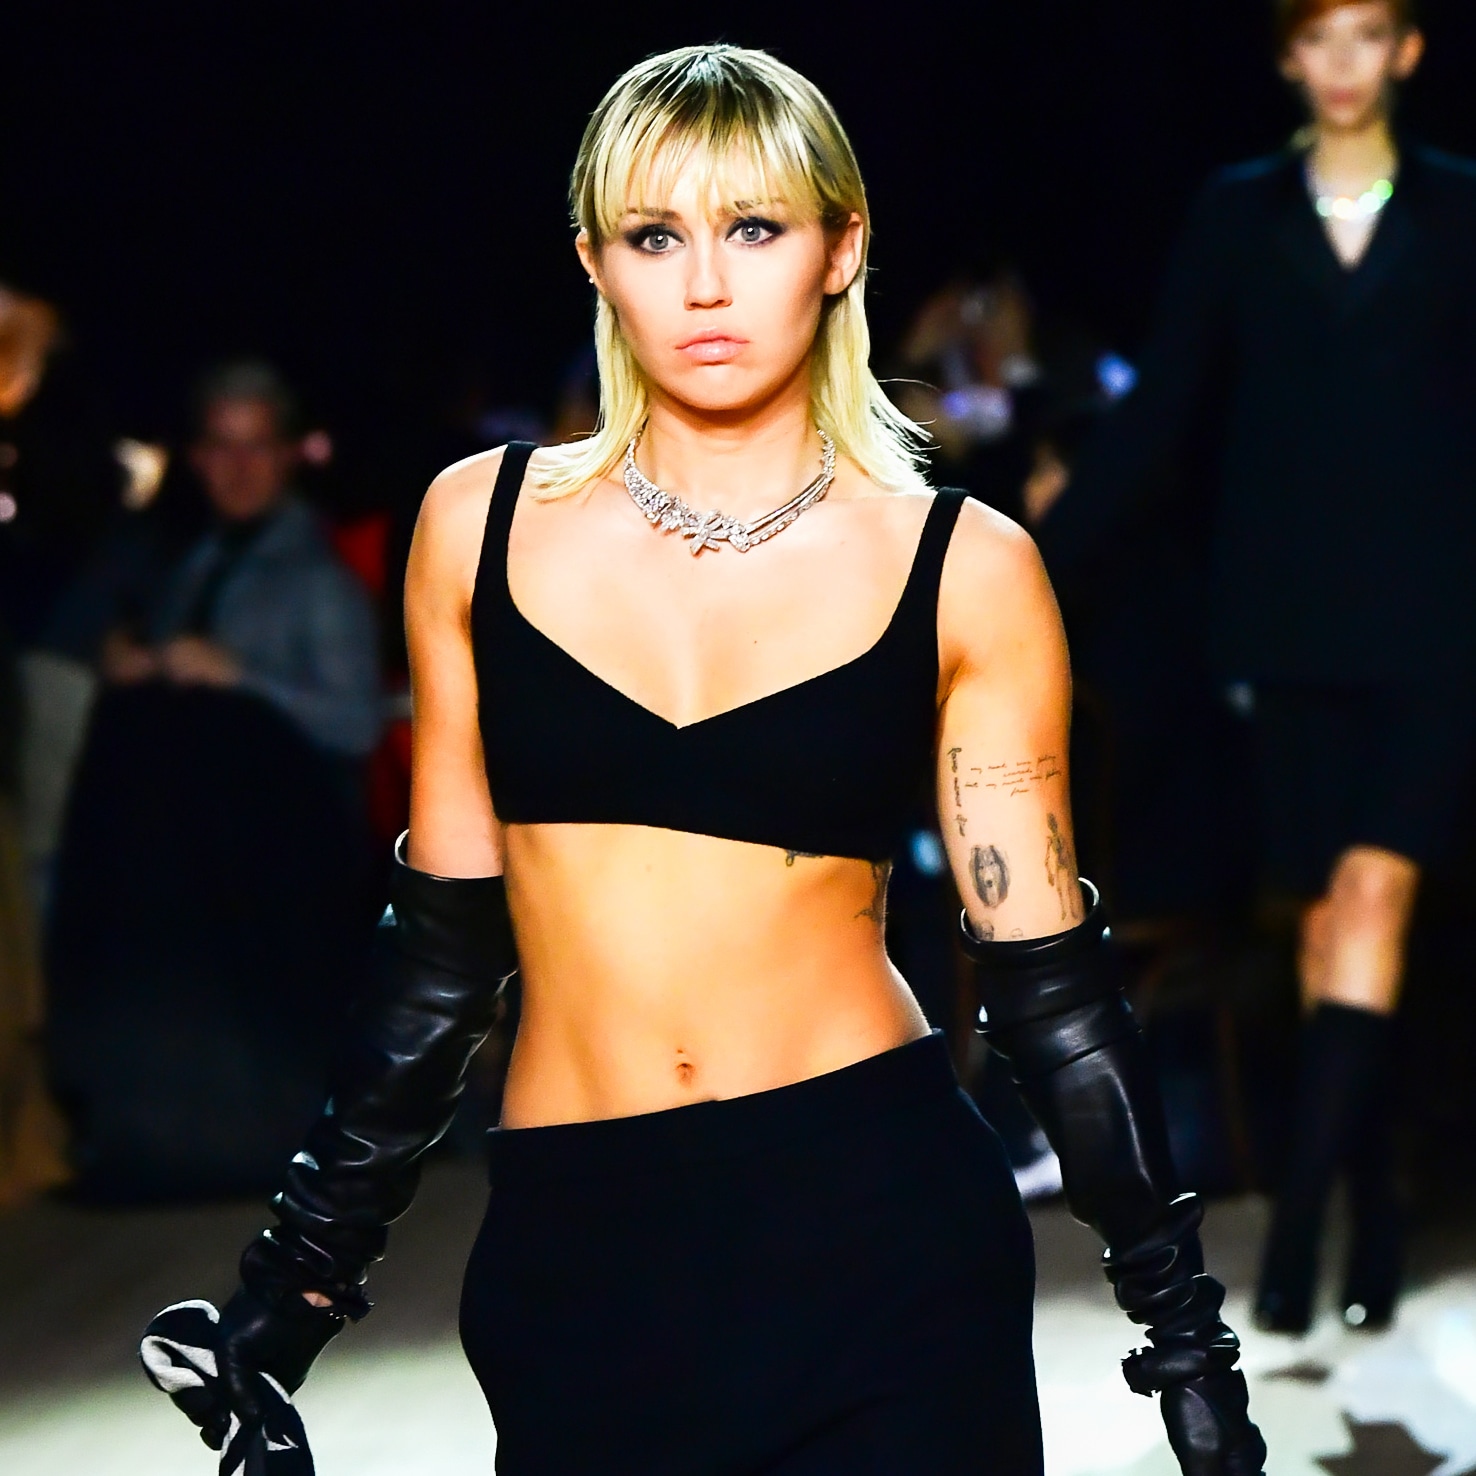 Best Looks at Fashion Week, Fashion Week Widget, Marc Jacobs, Miley Cyrus